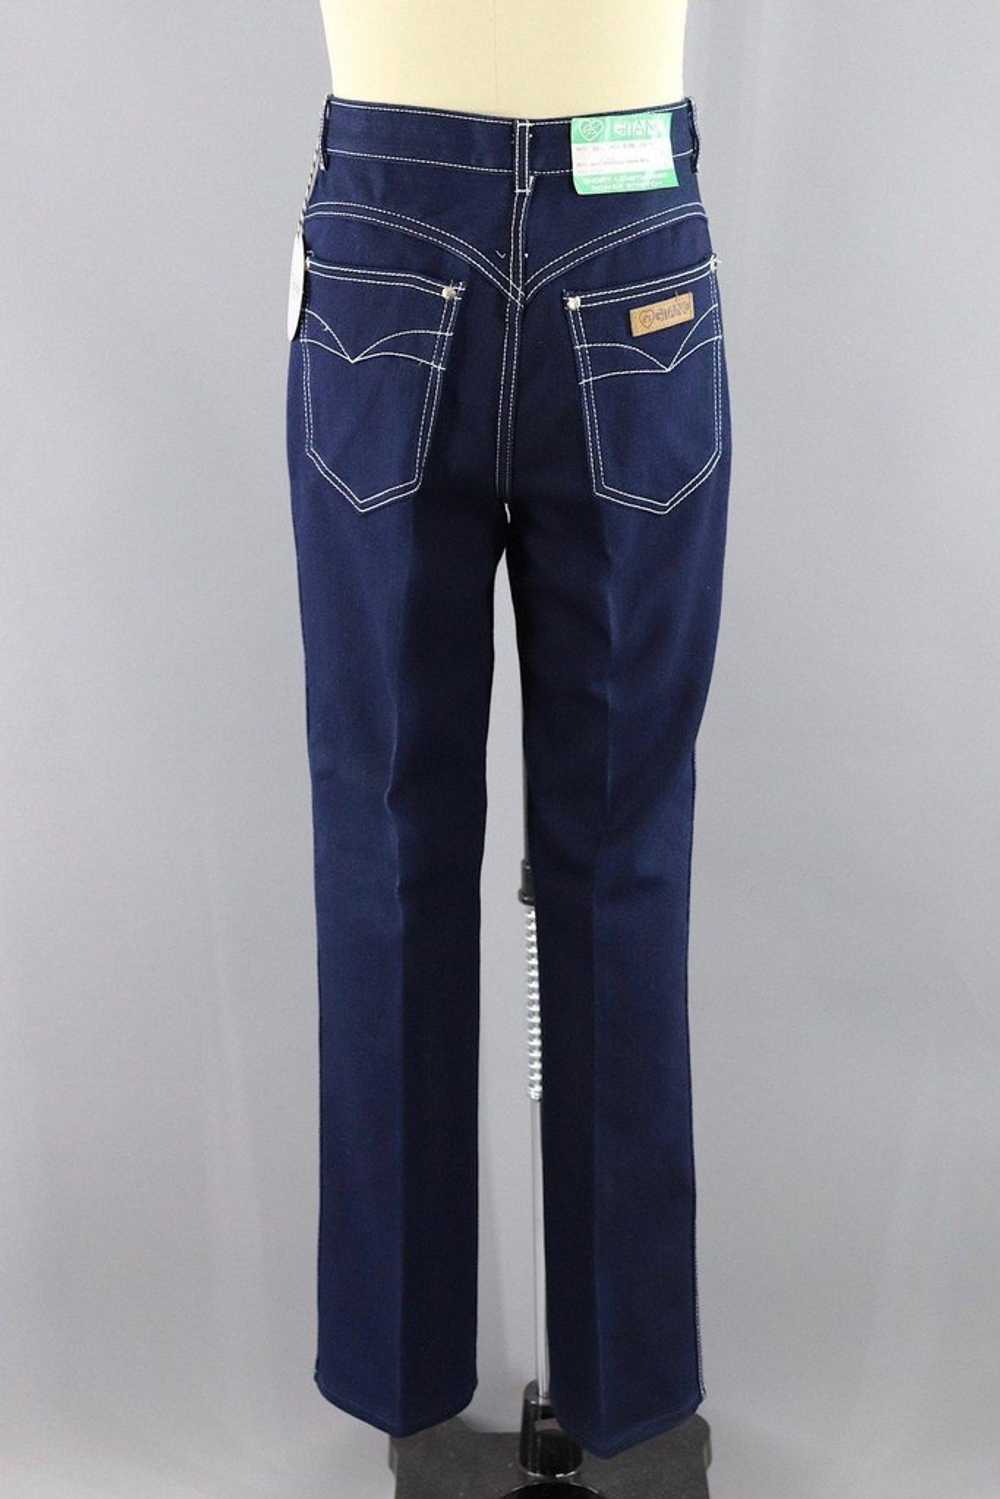 Vintage 1980s Gitano Jeans with Original Tags - image 5